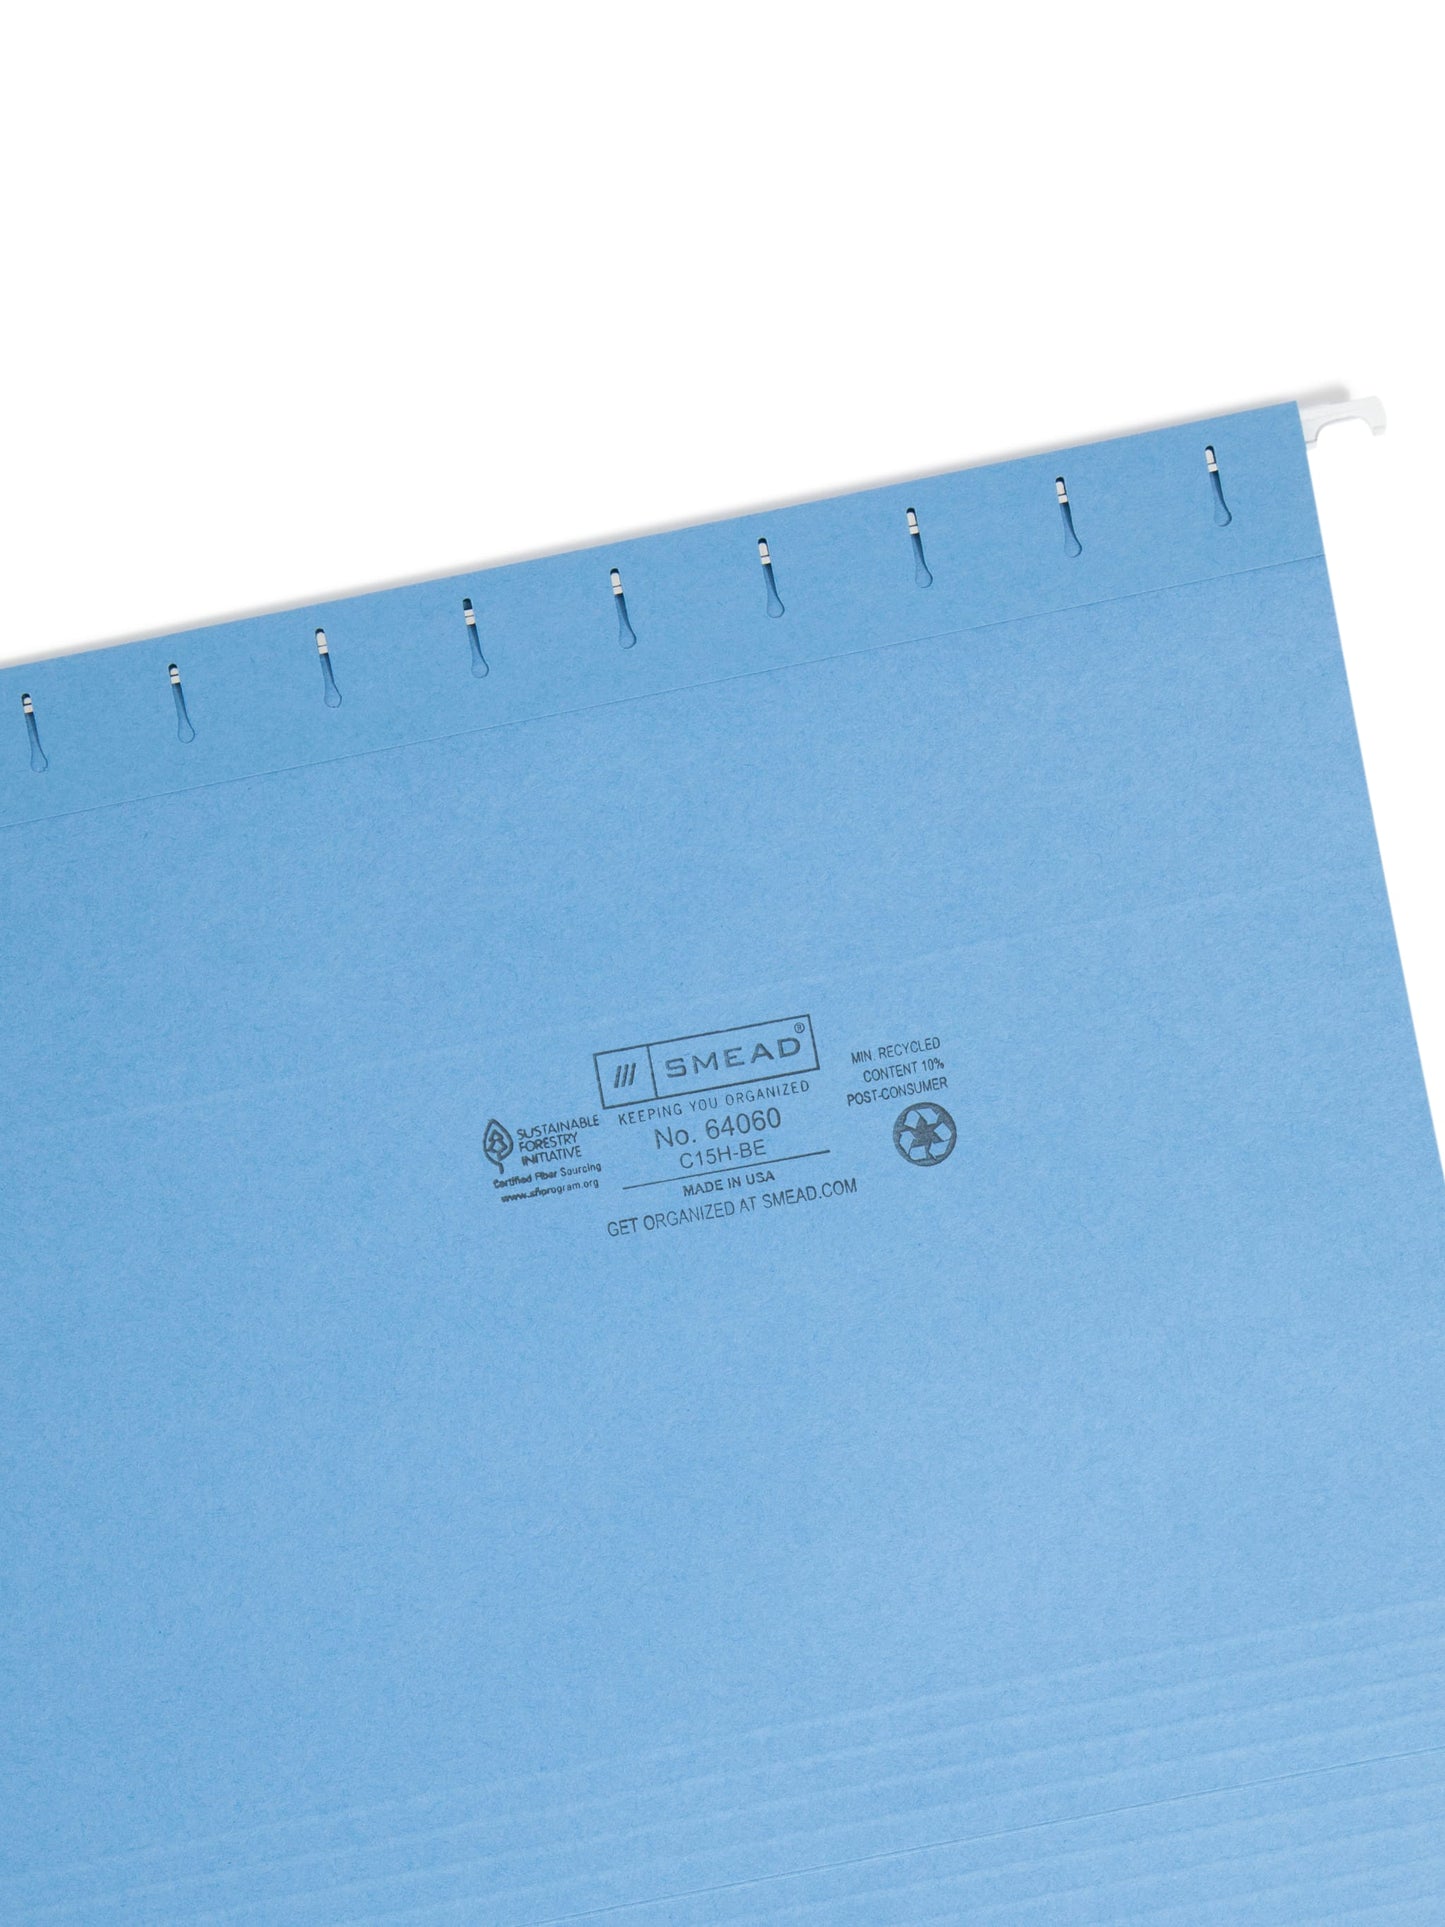 Standard Hanging File Folders with 1/5-Cut Tabs, Blue Color, Letter Size, Set of 25, 086486640602